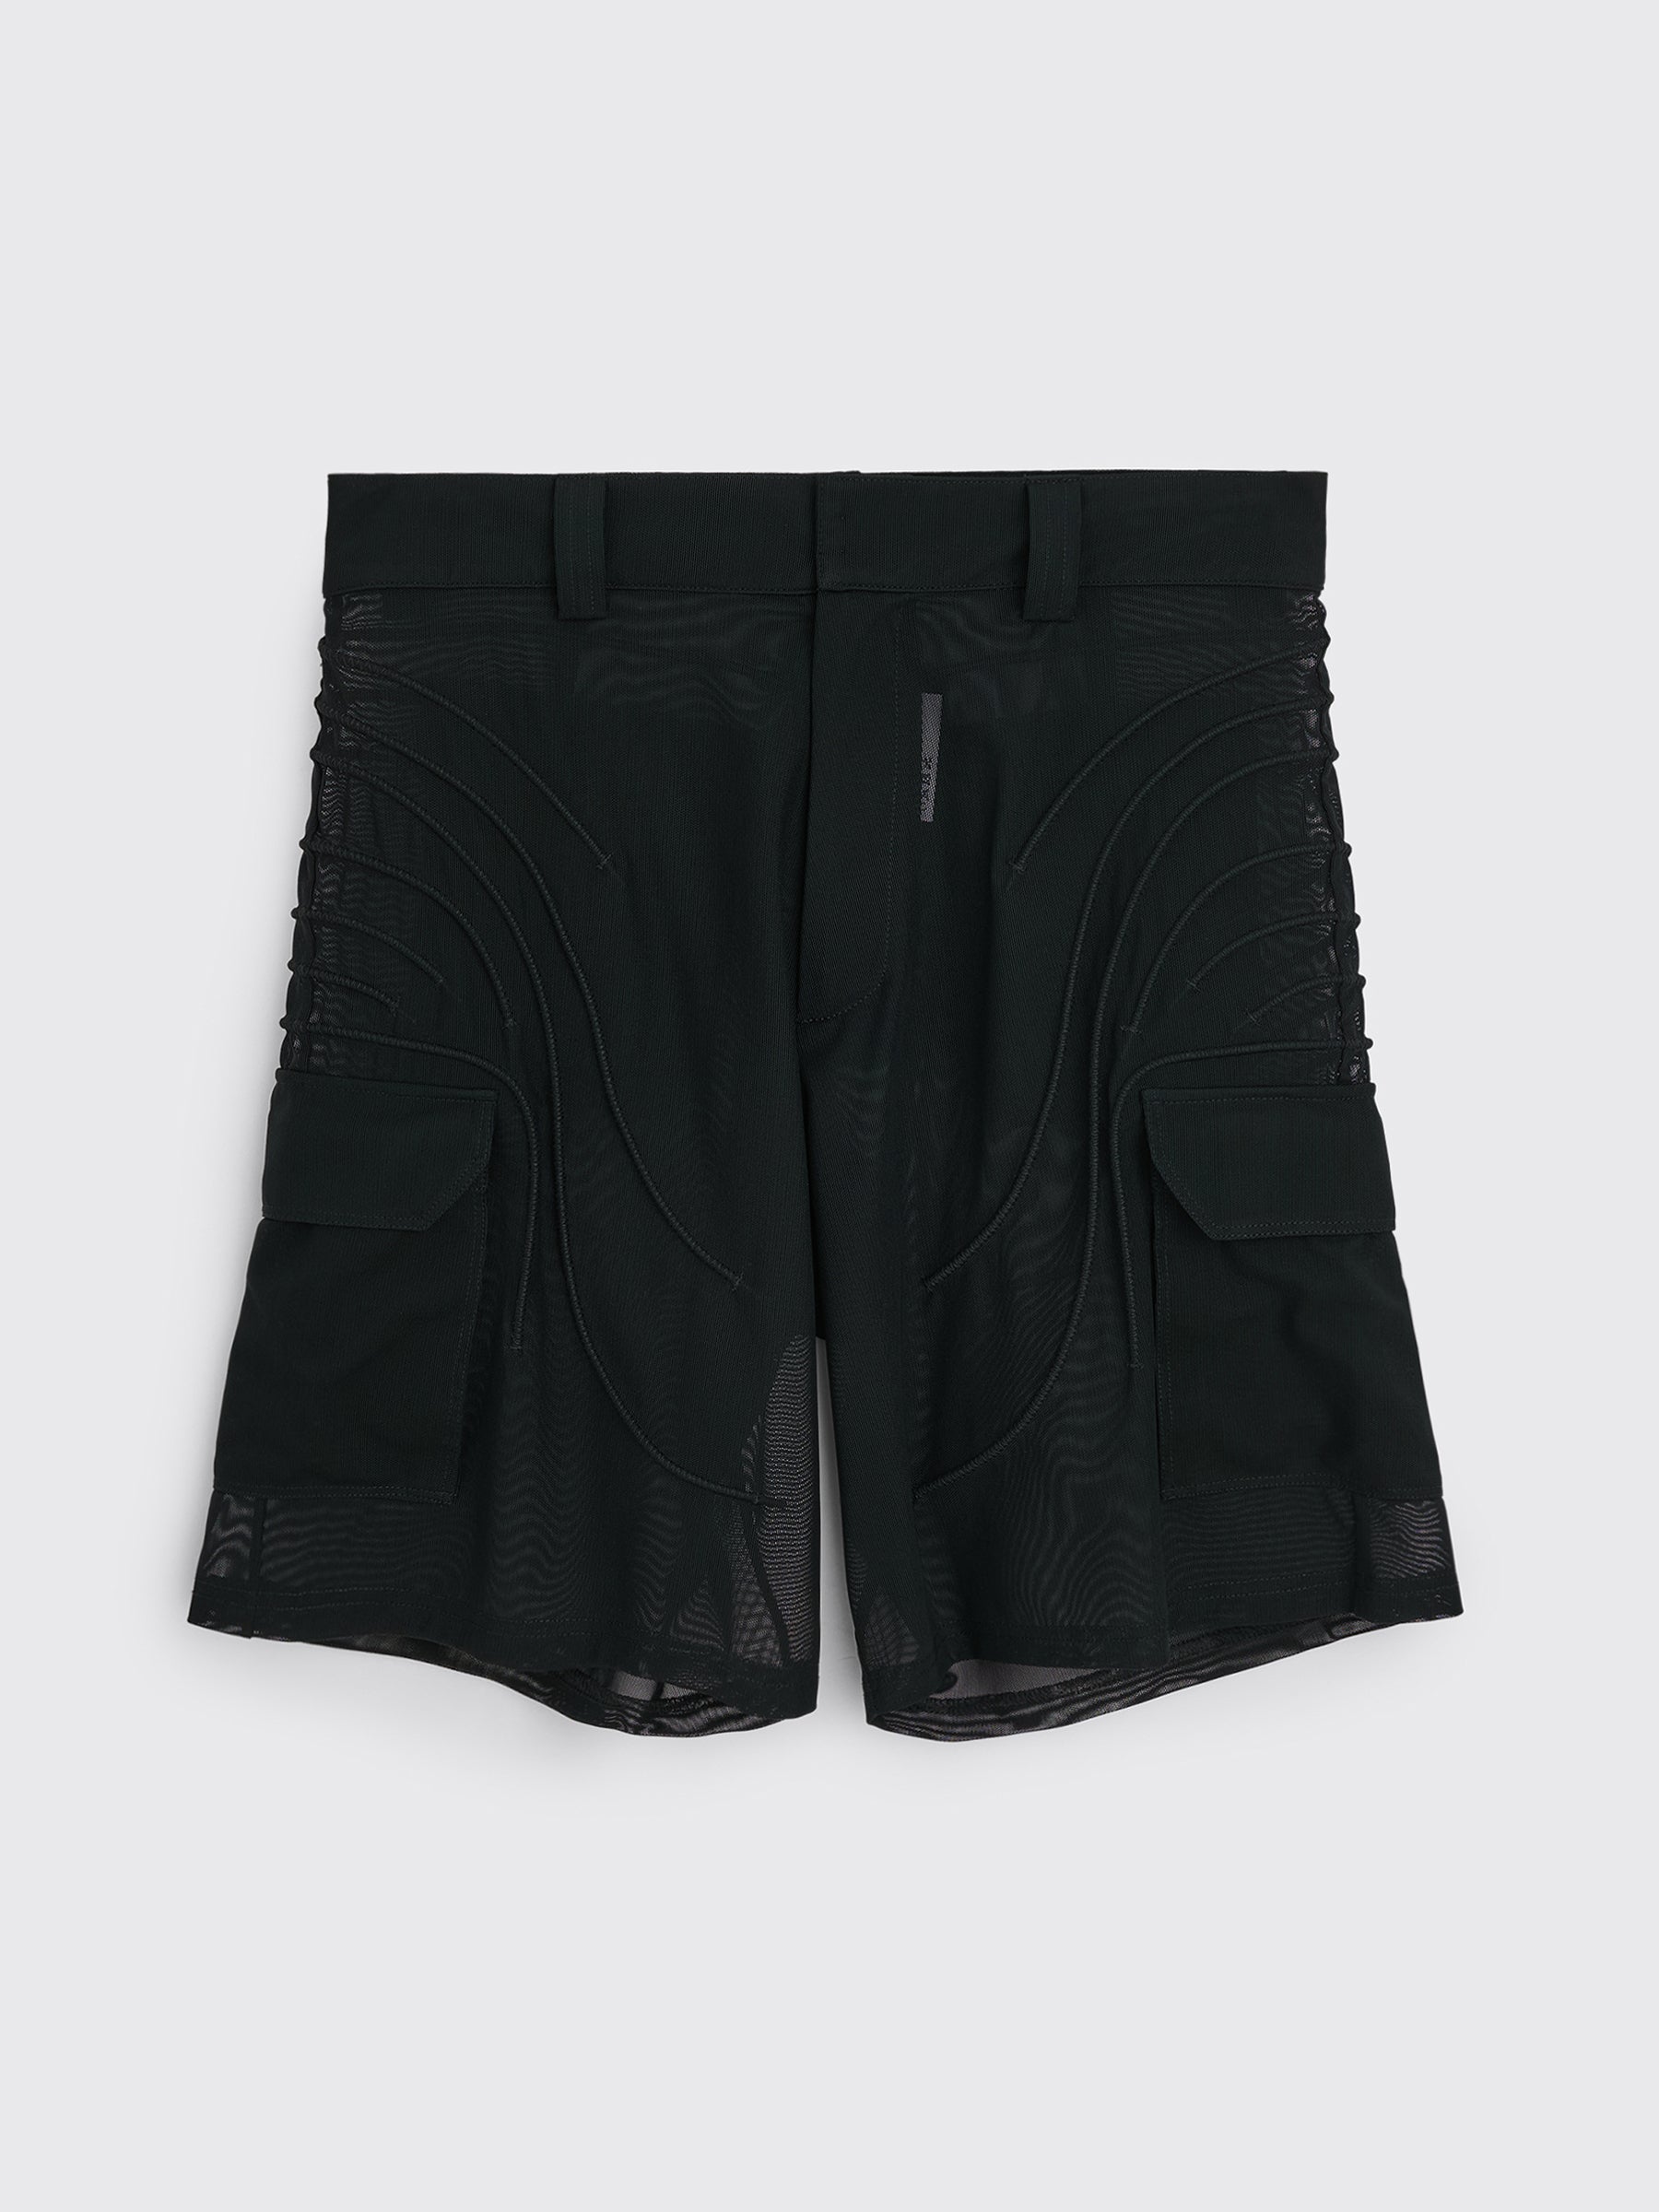 Olly Shinder Veins Utility Shorts Black